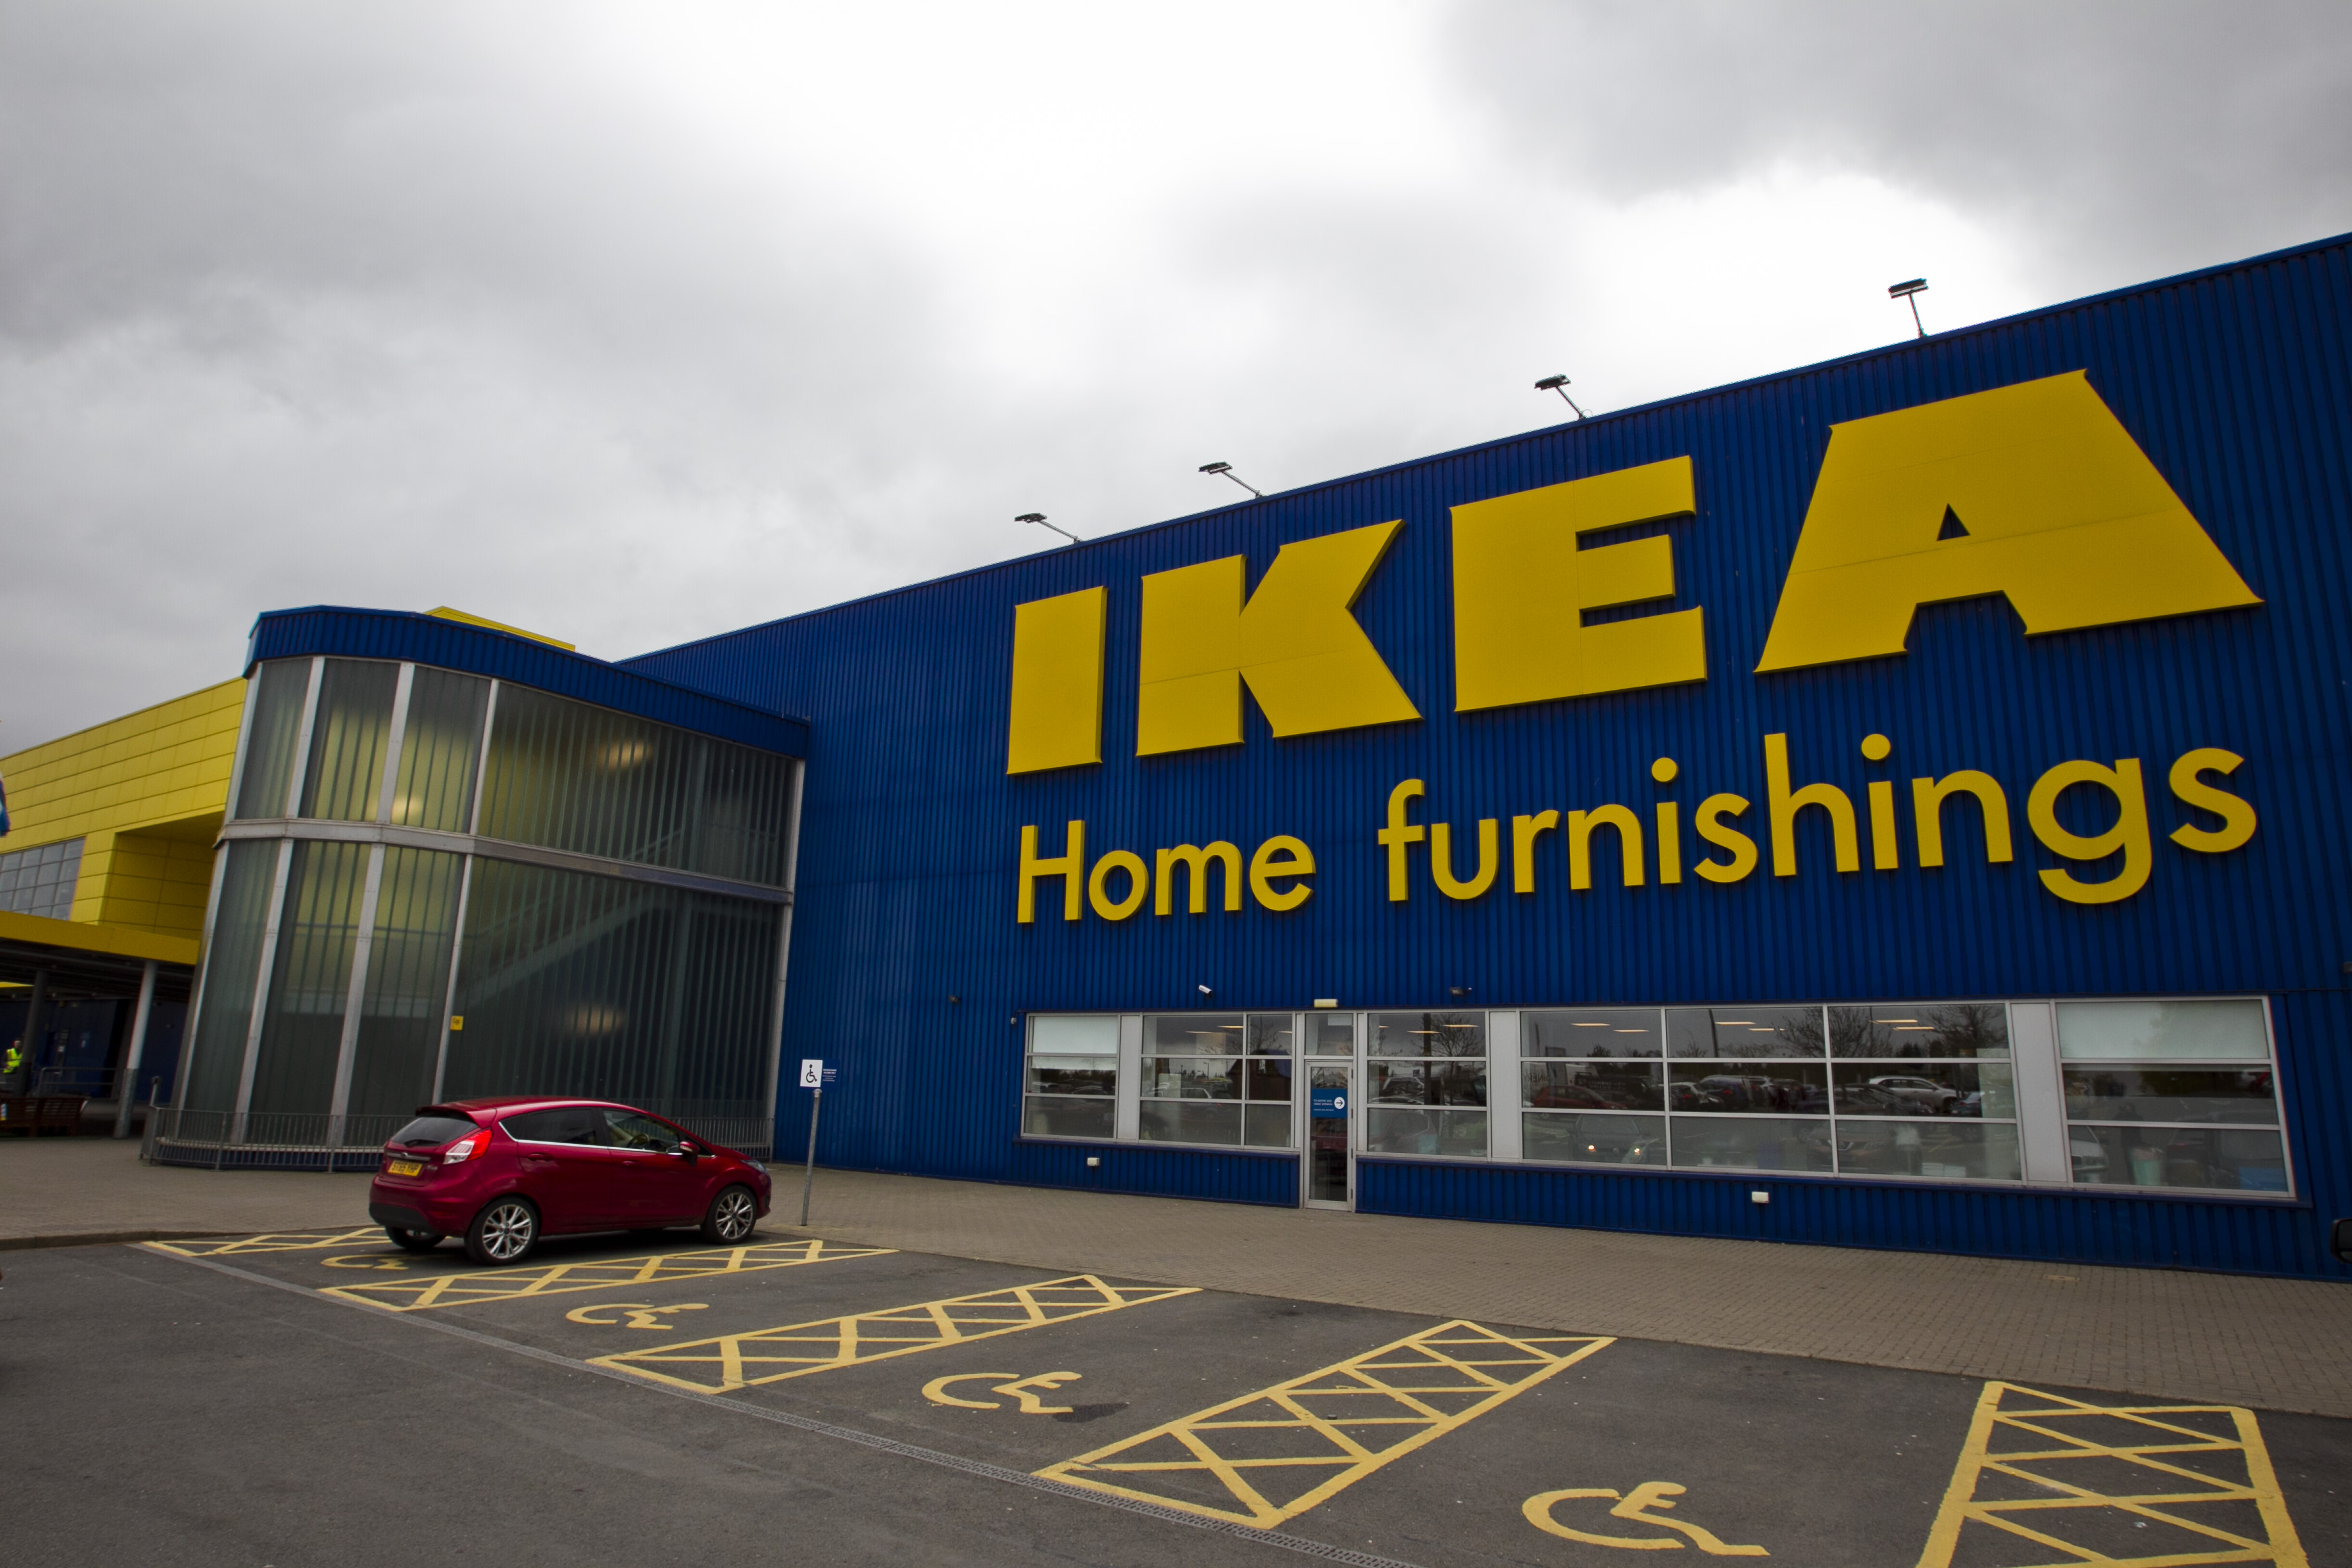 Ikea in Edinburgh (Andrew Cawley / DC Thomson)